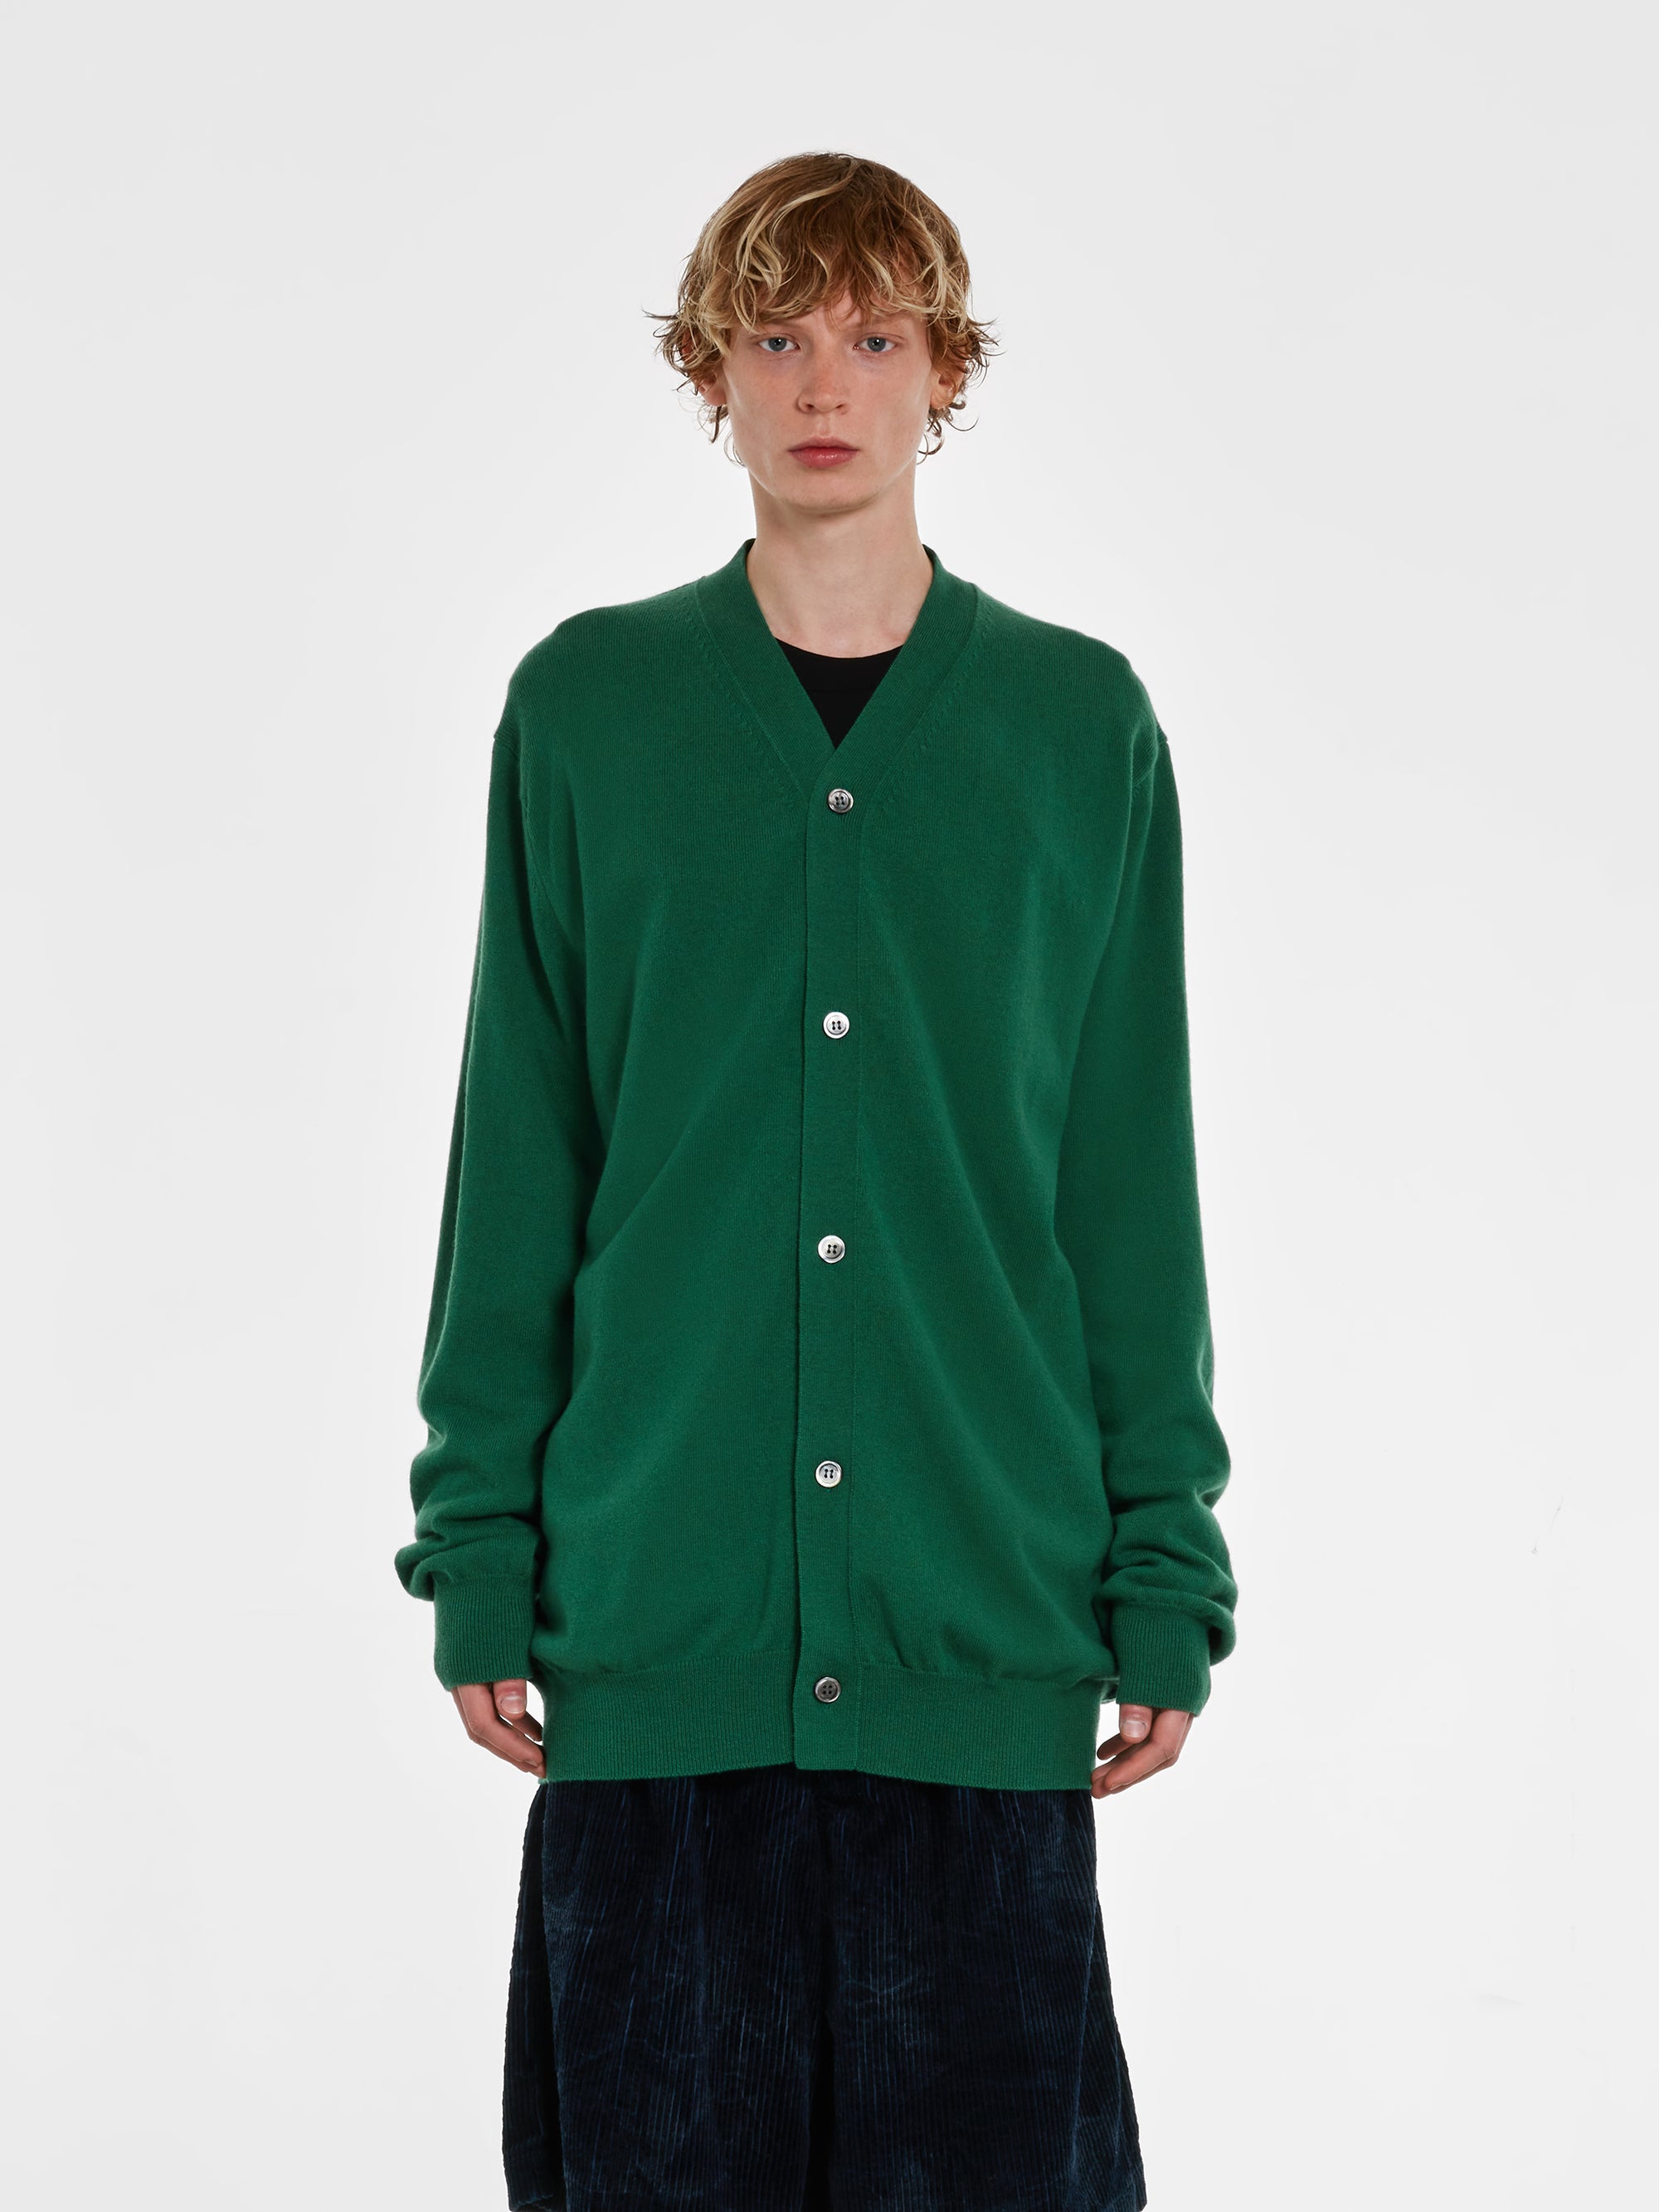 CDG Shirt - Men's Wool Cardigan - (Green) view 1